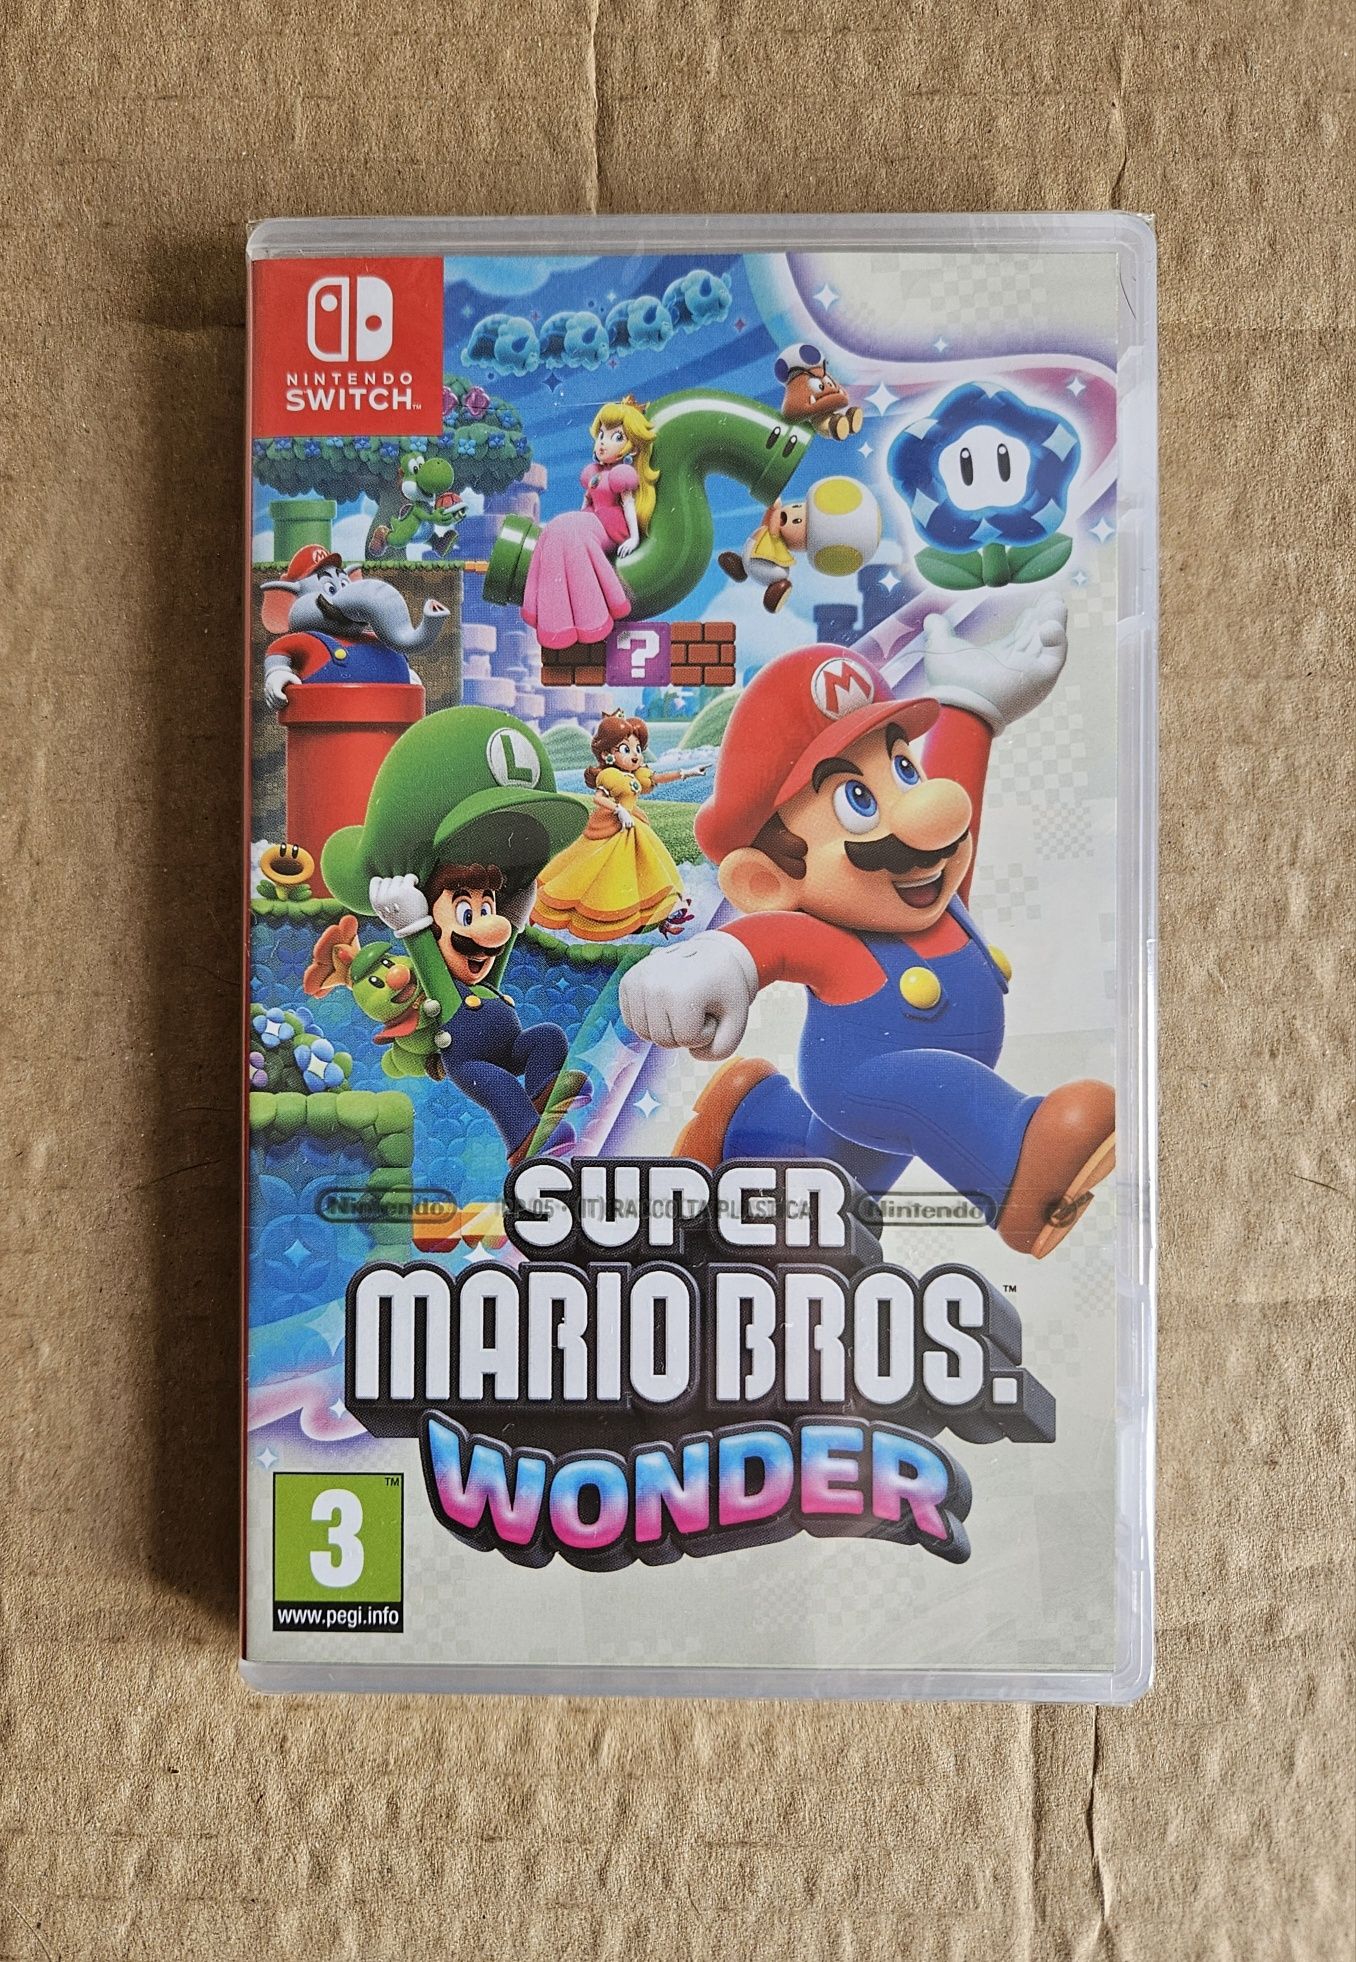 Super Mario Bros. Wonder - Nintendo Switch 
Ninten Switch